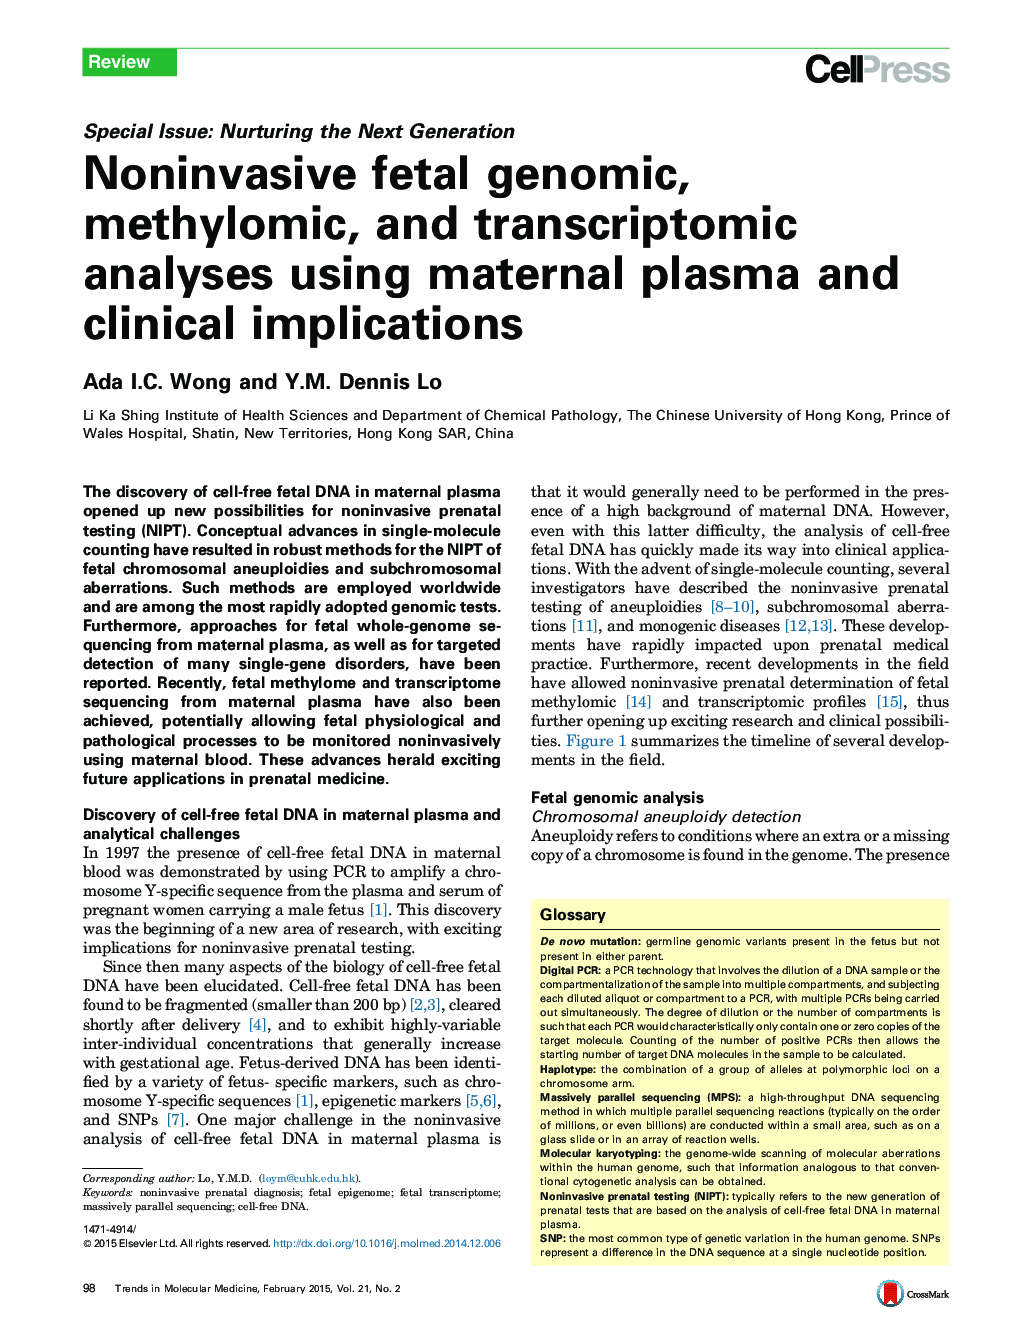 Noninvasive fetal genomic, methylomic, and transcriptomic analyses using maternal plasma and clinical implications